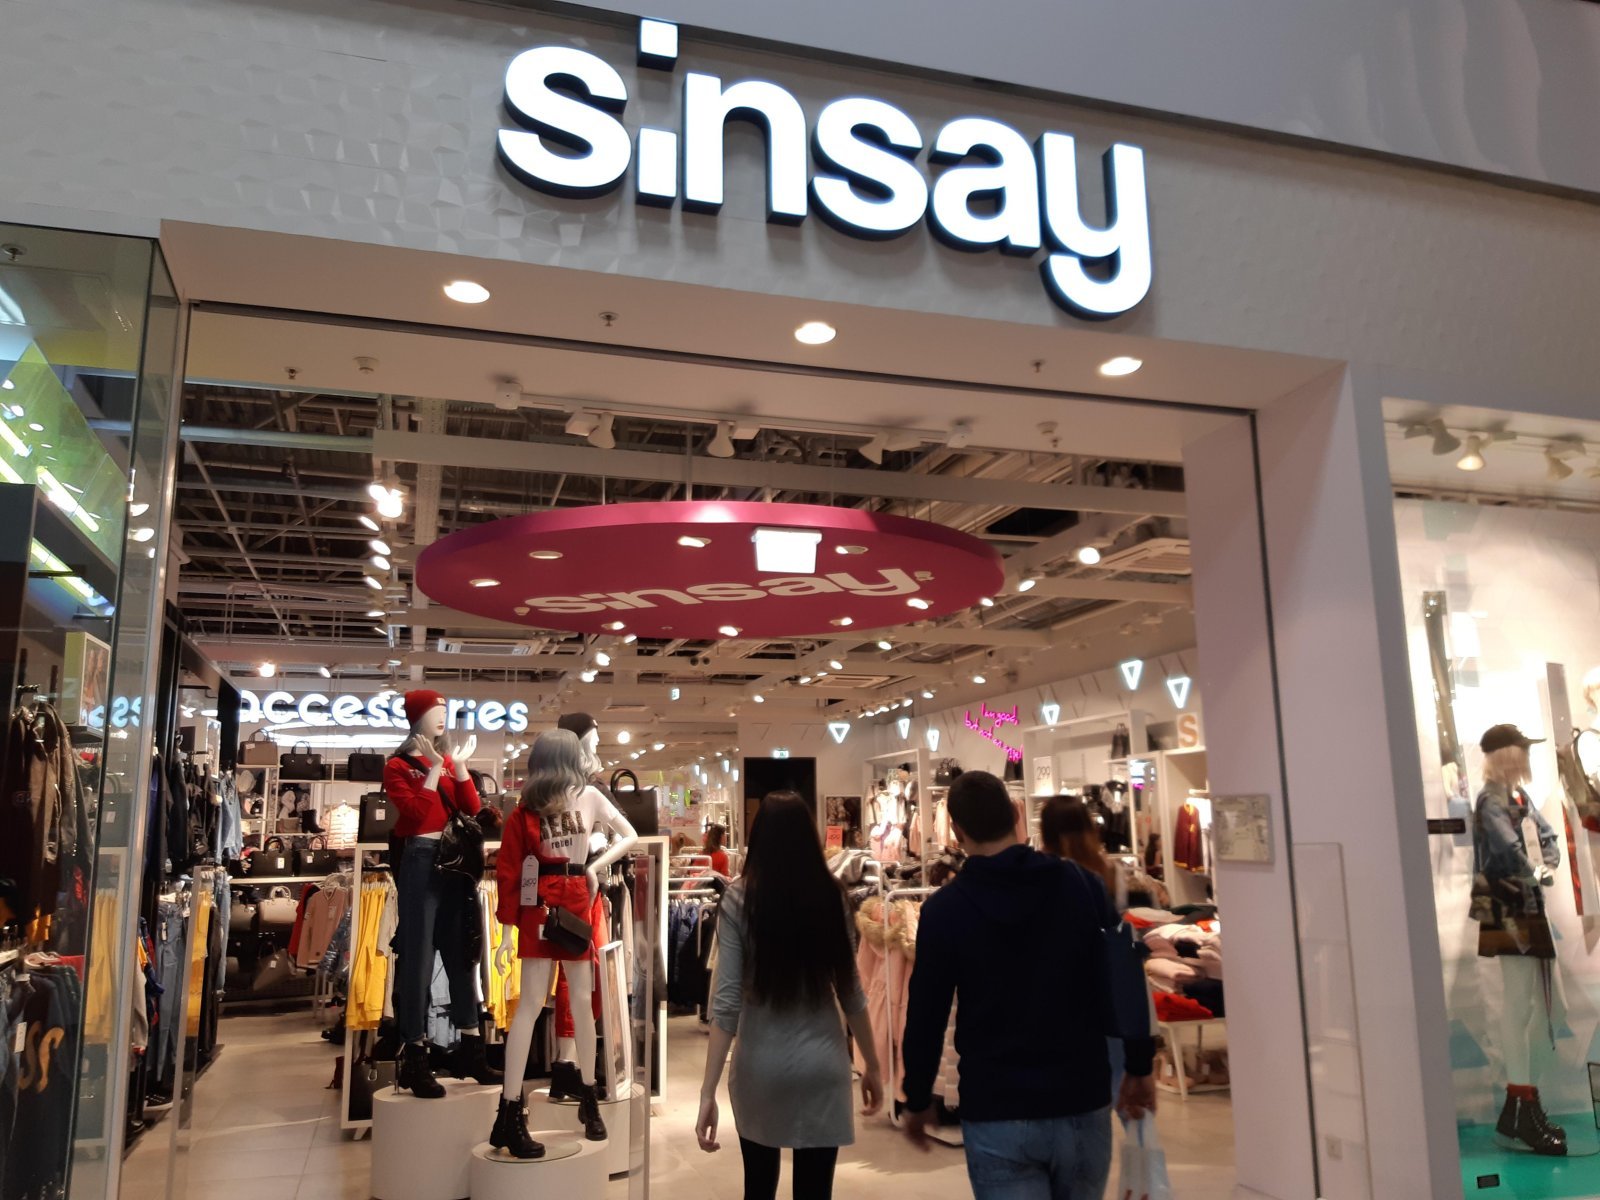 Sinsay Интернет Магазин Одежды